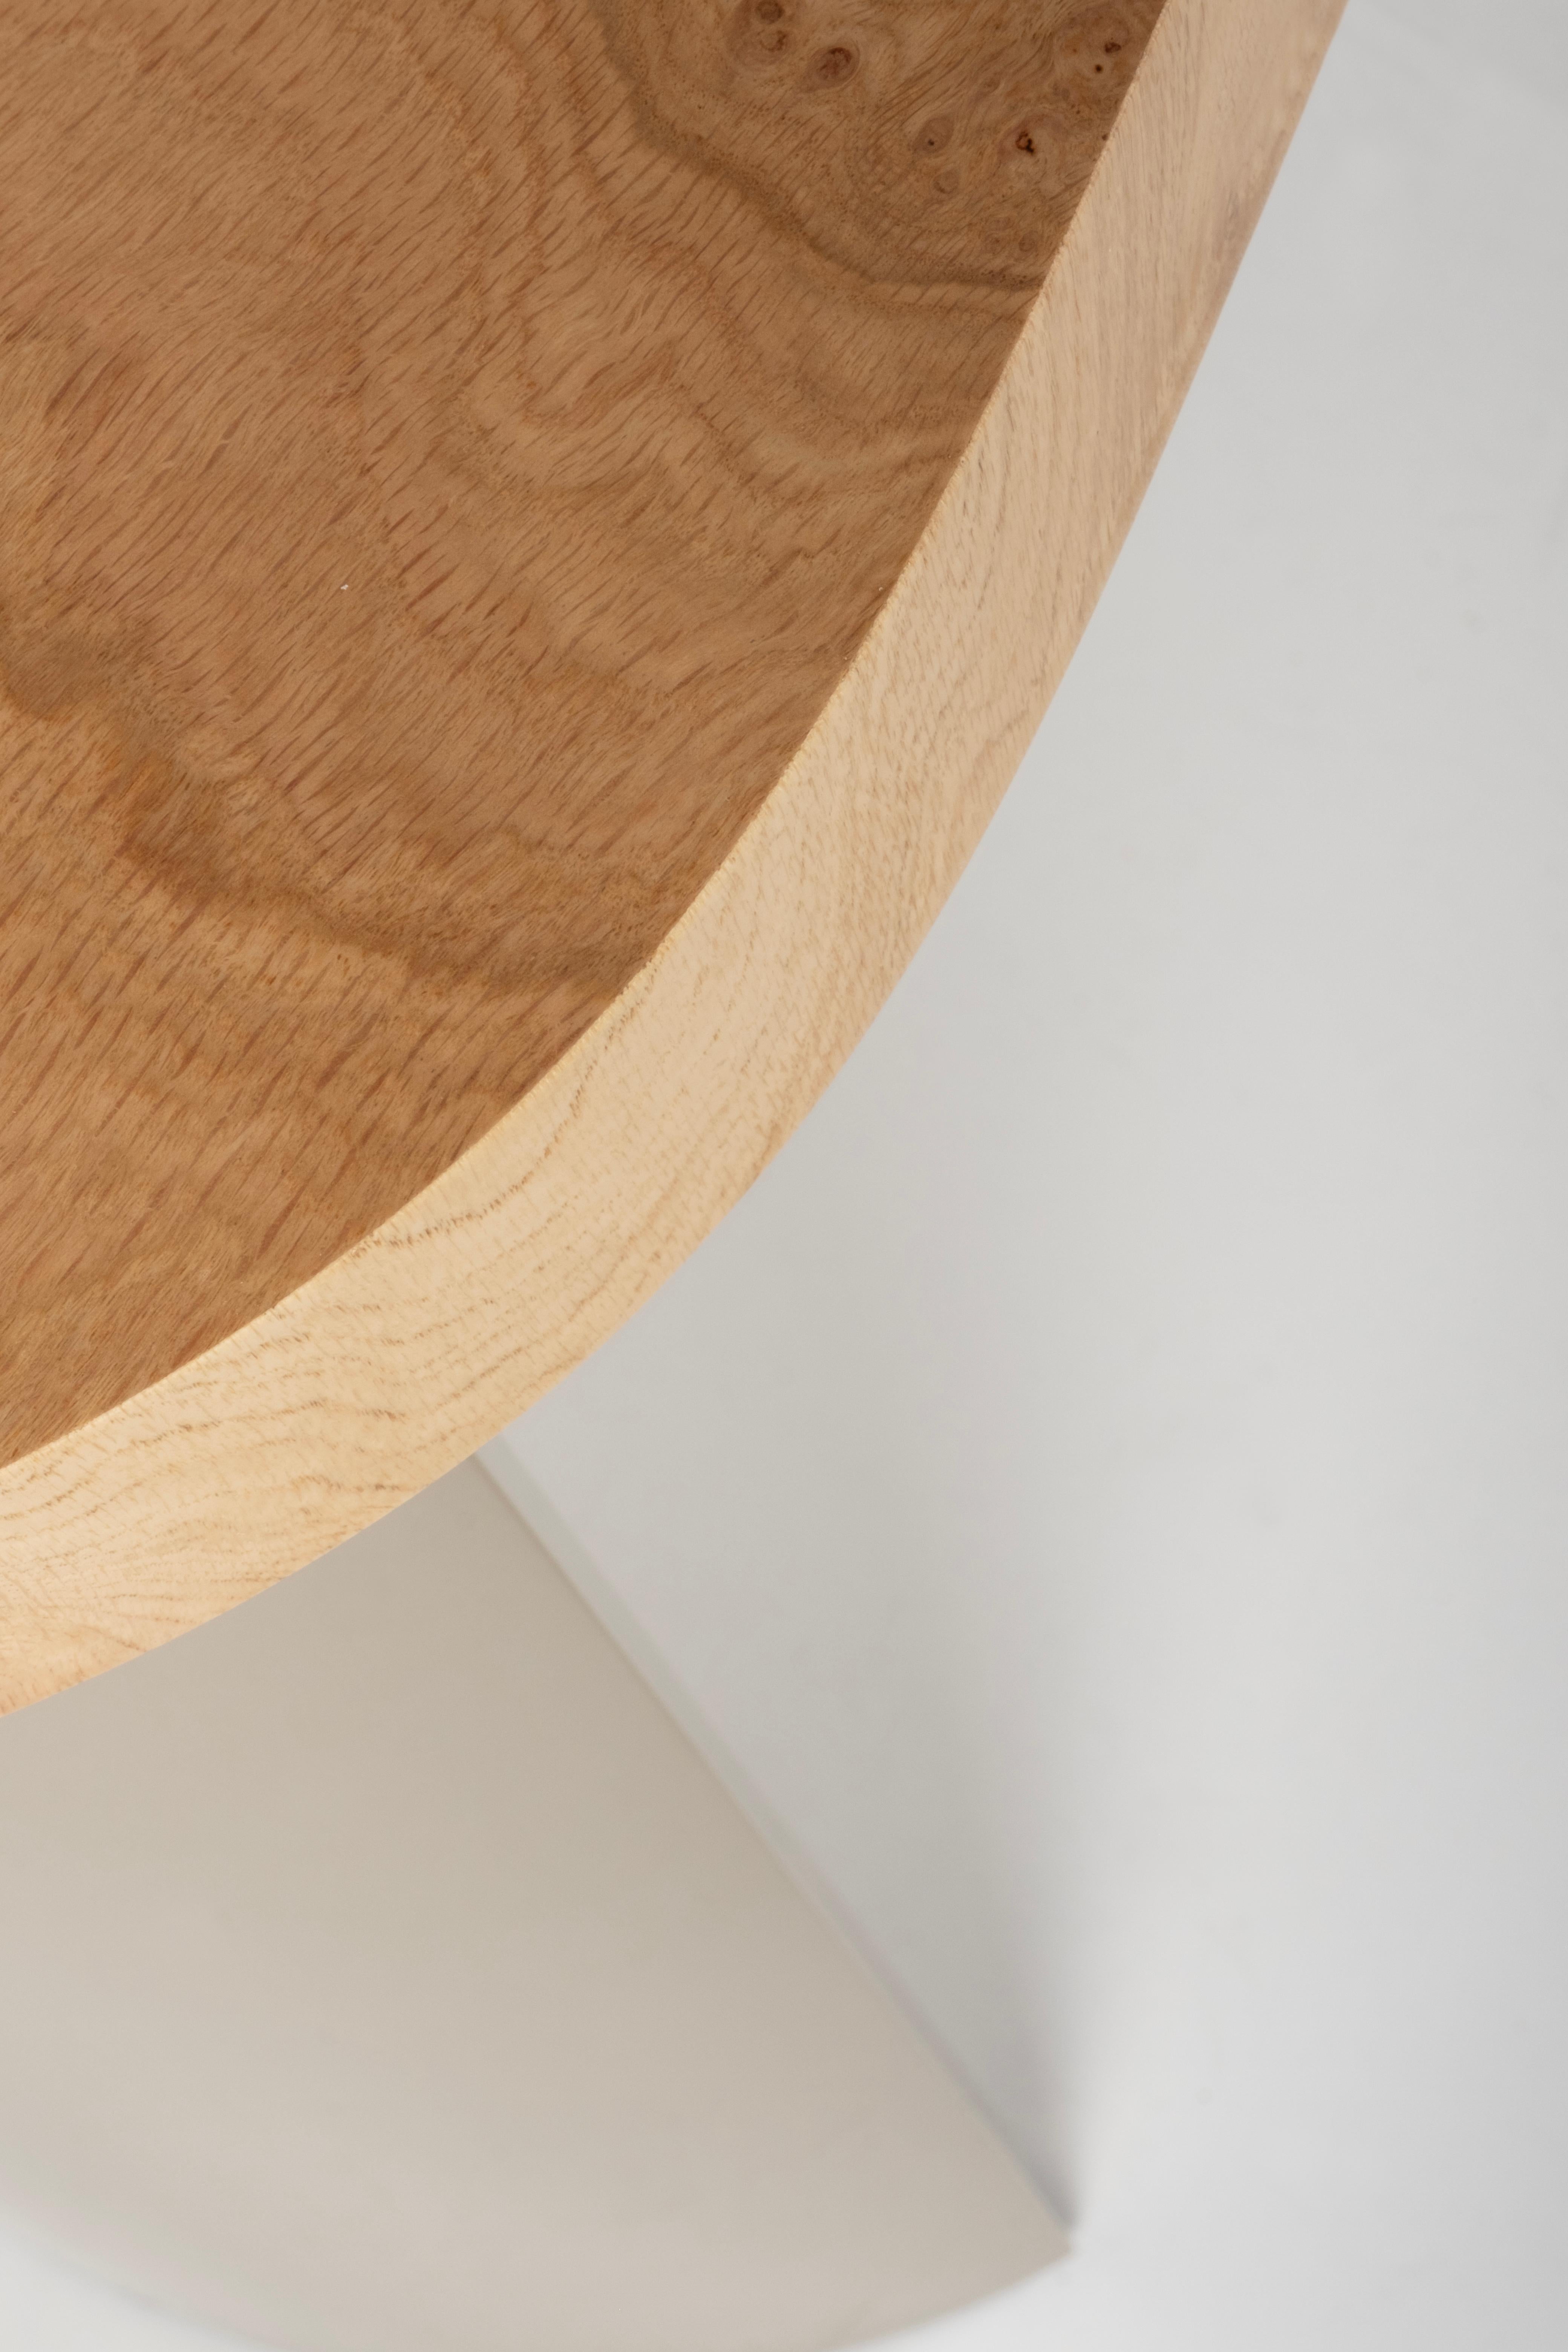 Wood Organic Modern Armona Desk, Oak Root, Handmade in Portugal by Greenapple For Sale